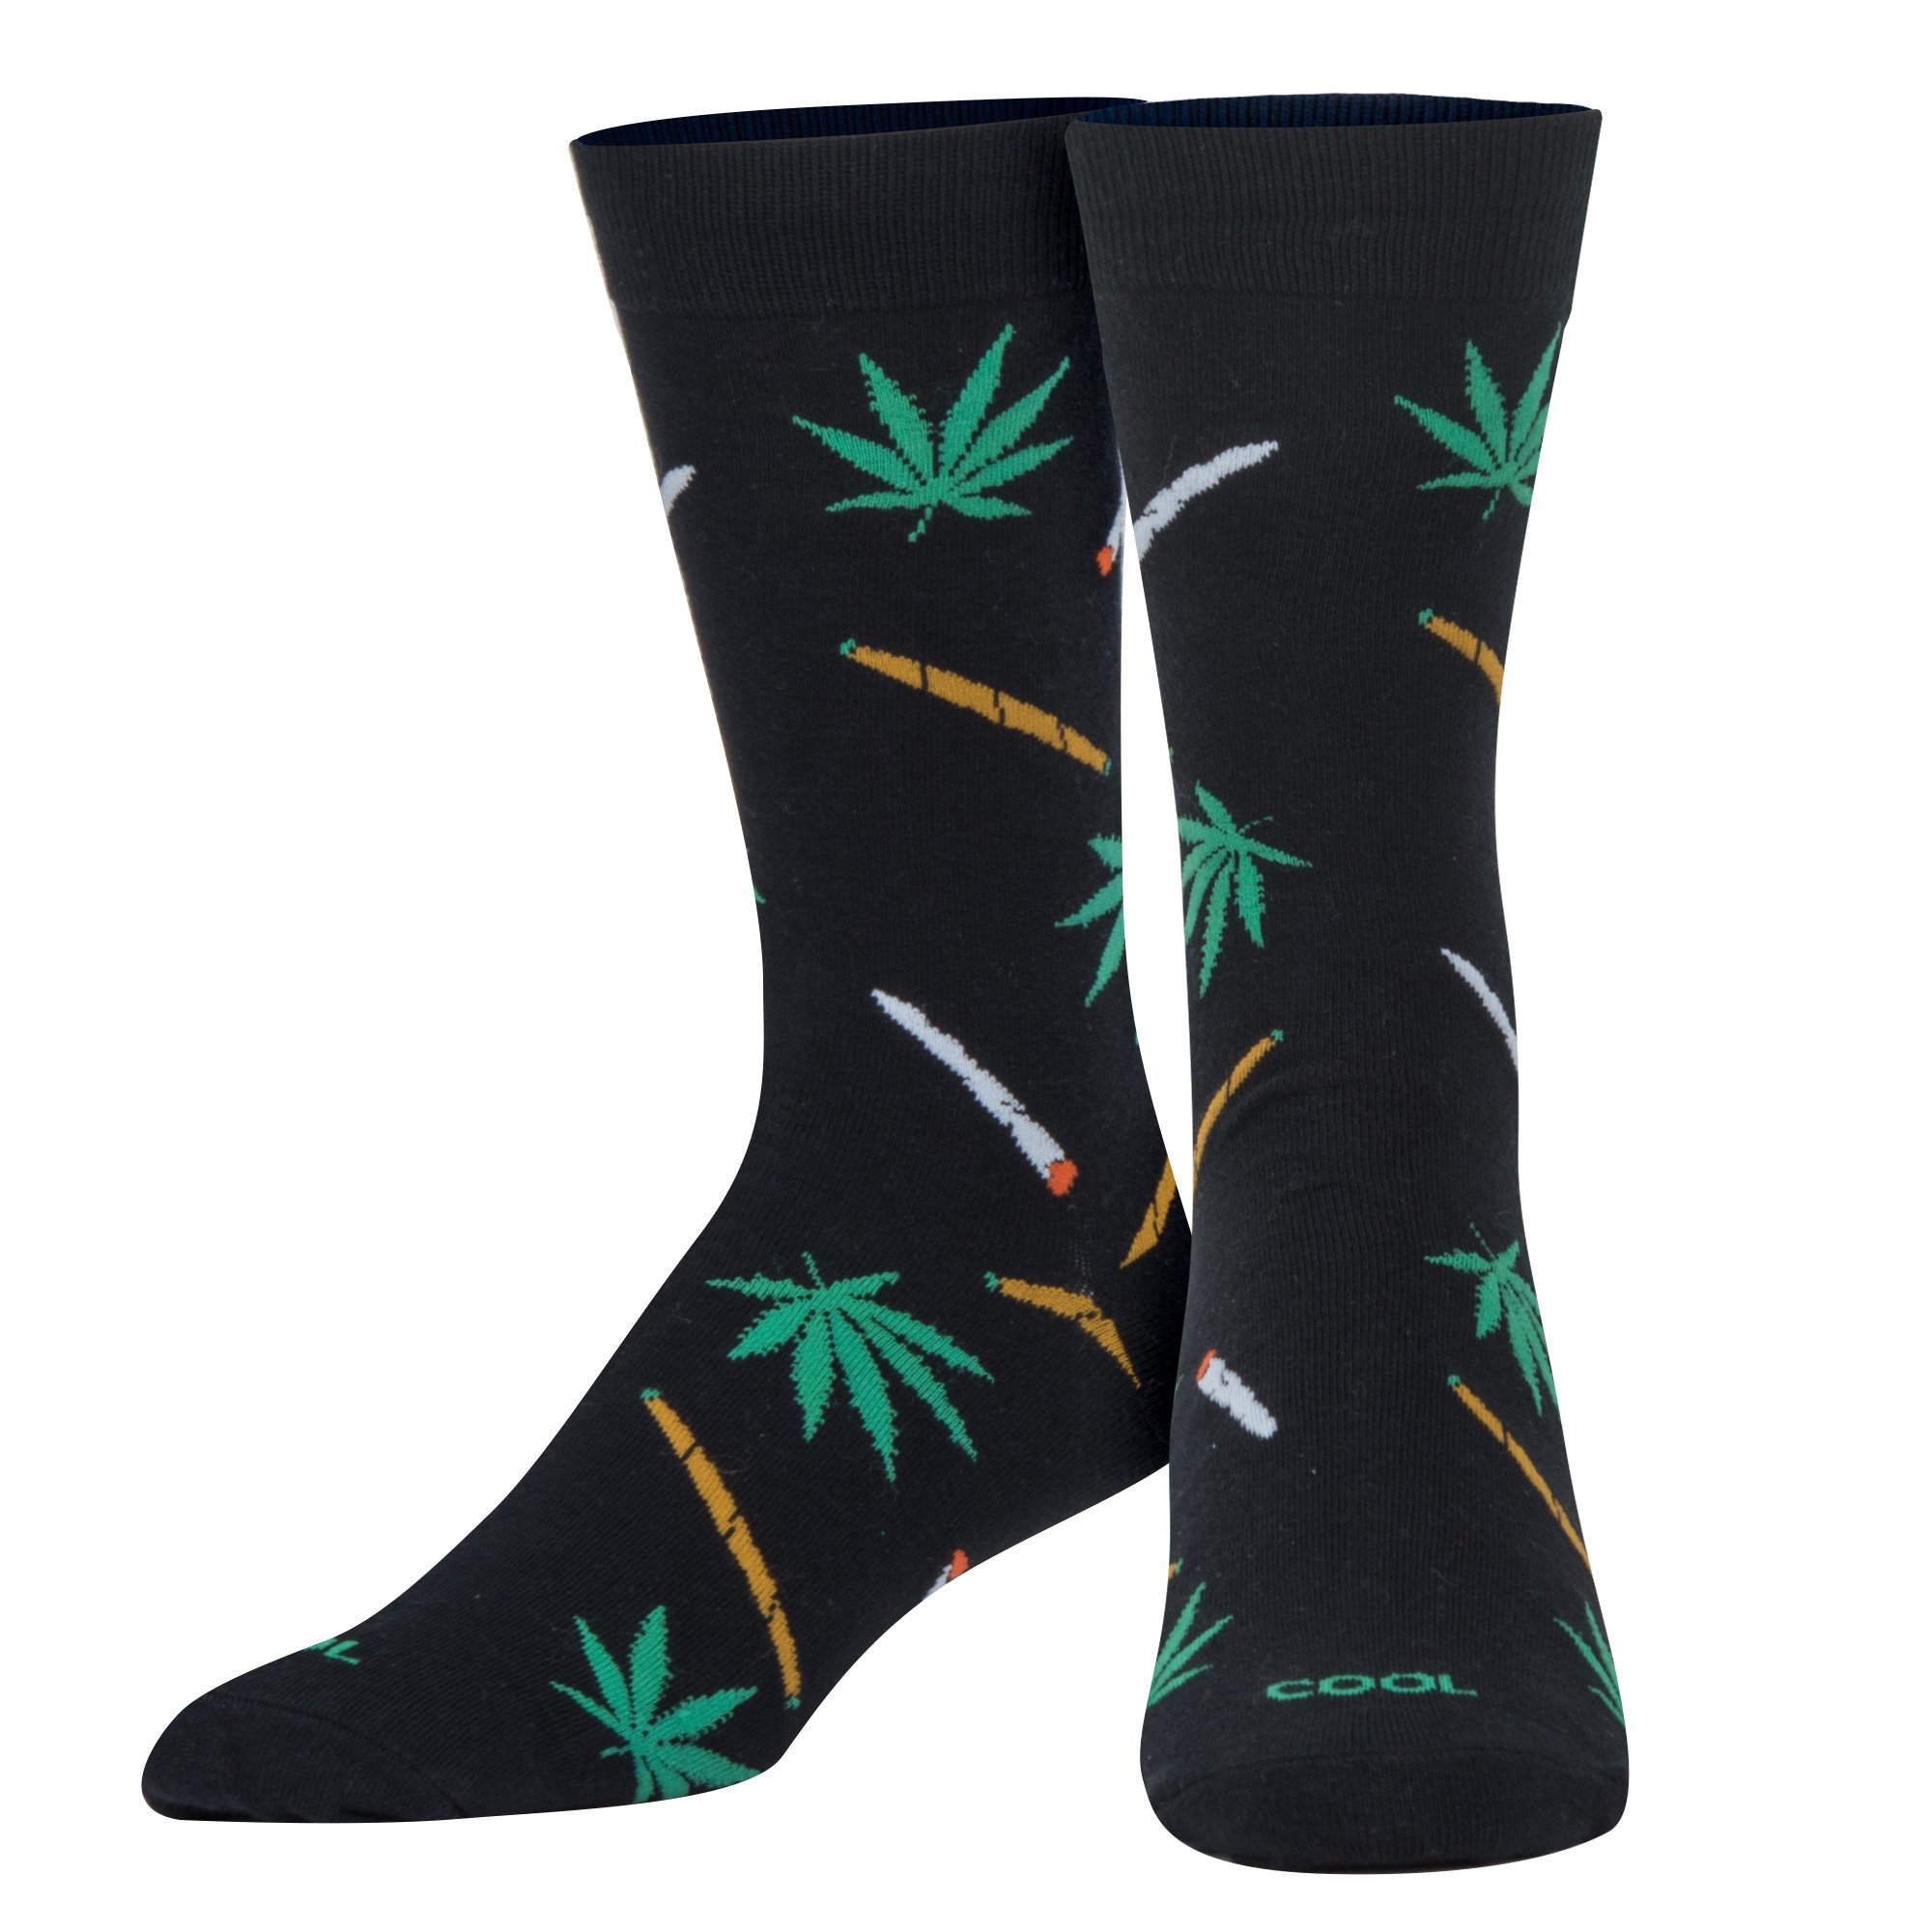 Weedies Marijuana Leaf Crew Socks - Men's